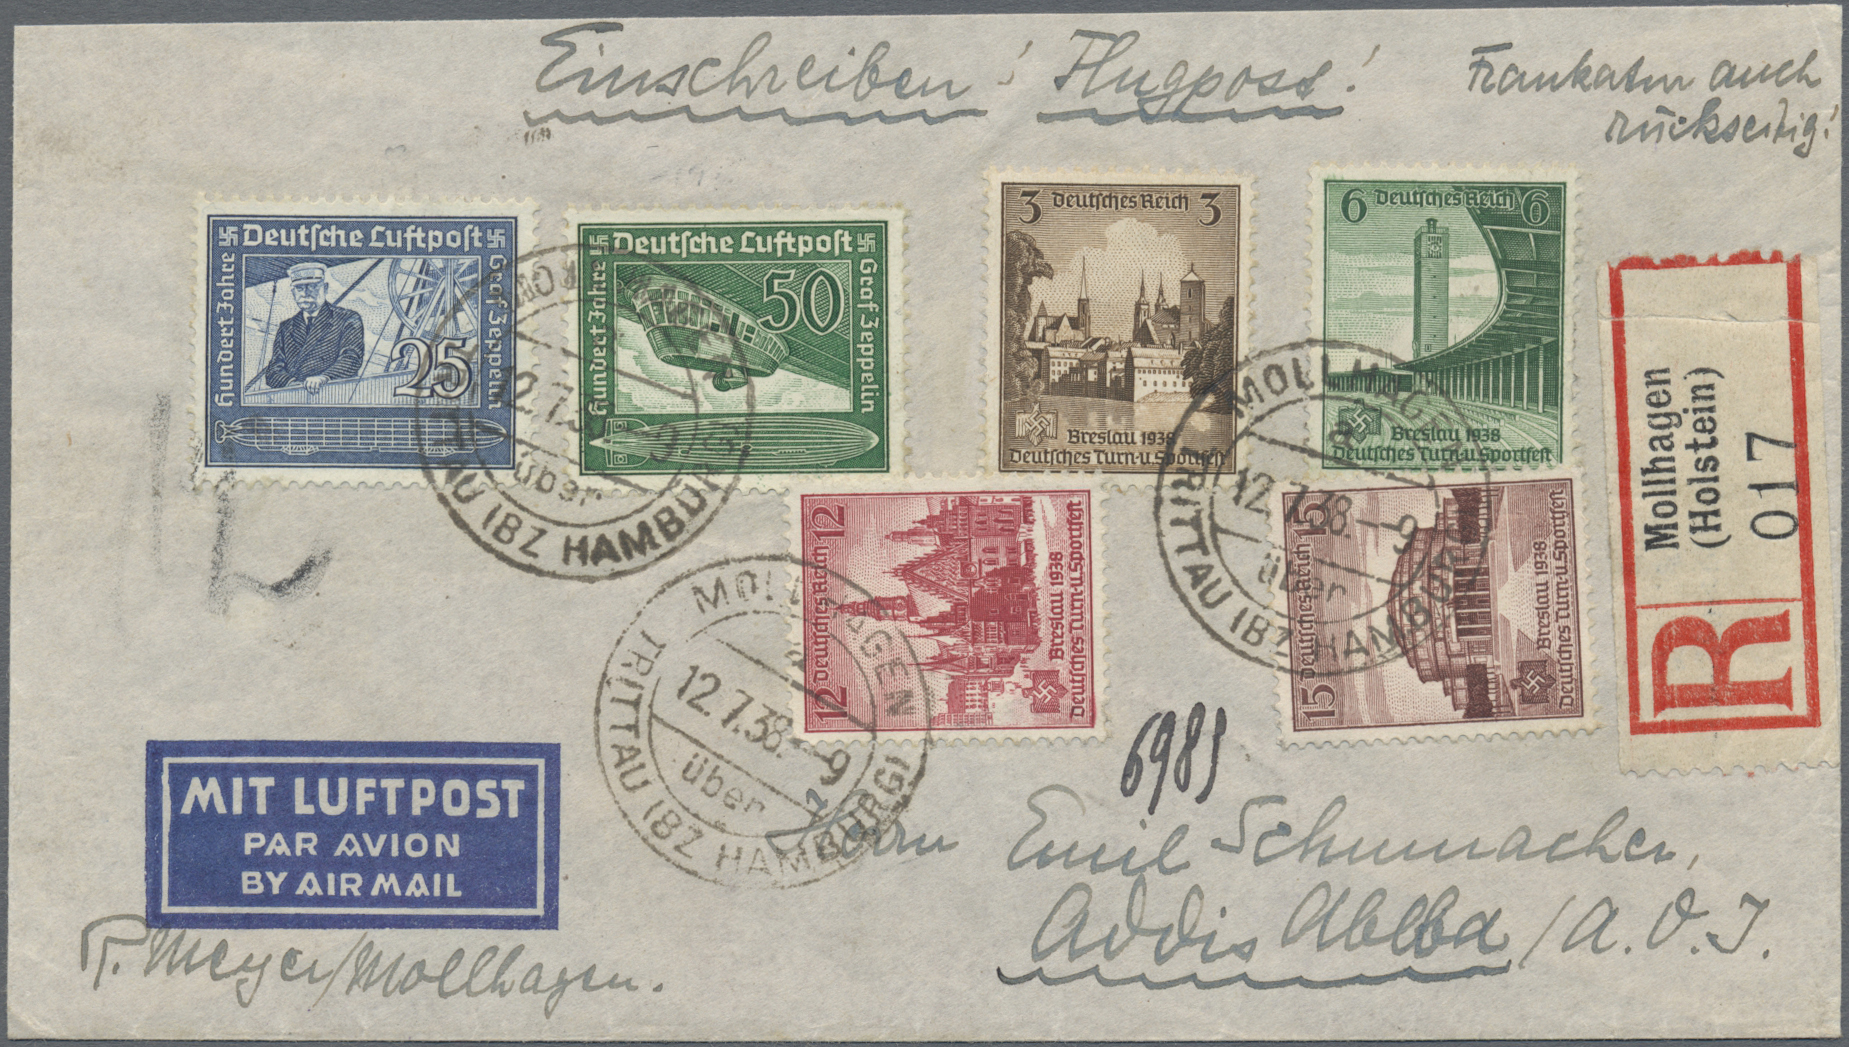 Stamp Auction - flugpost deutschland - Sale #44 Collections Overseas ...